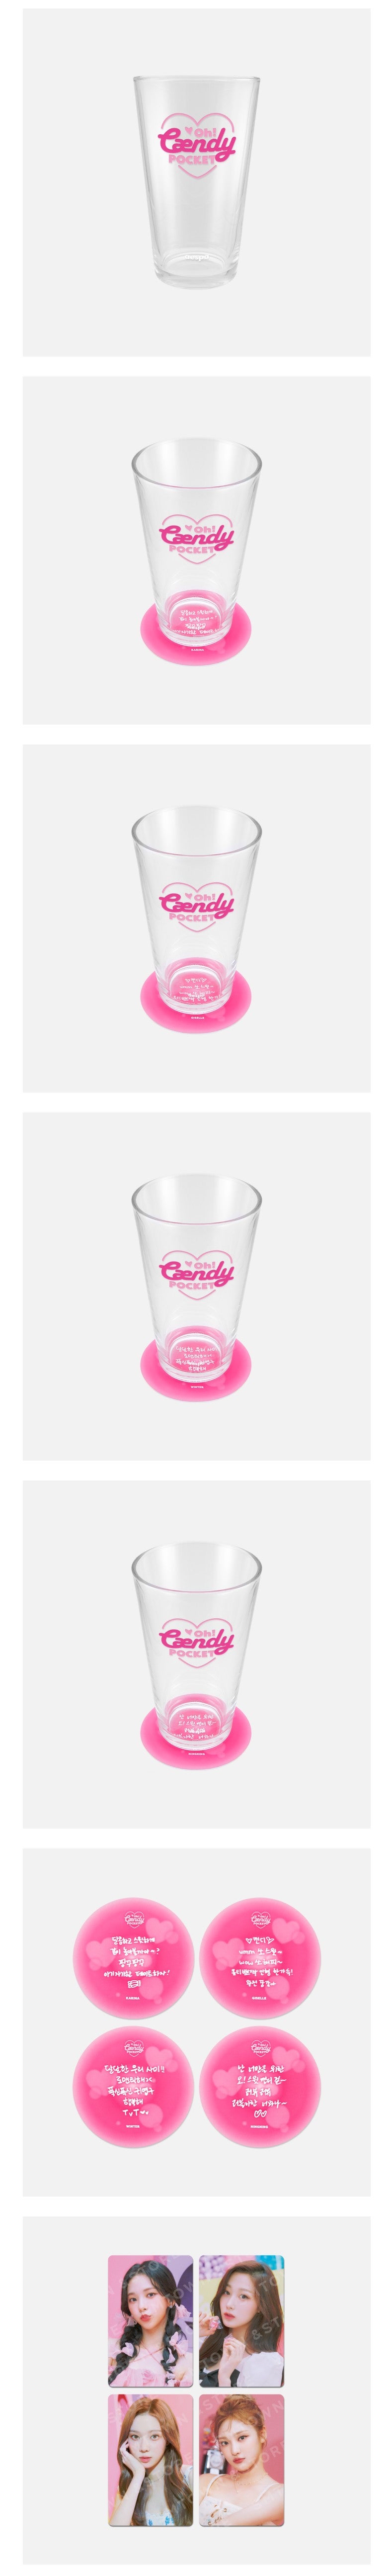 AESPA OH! Caendy Pocket Glass Cup & Coaster Set